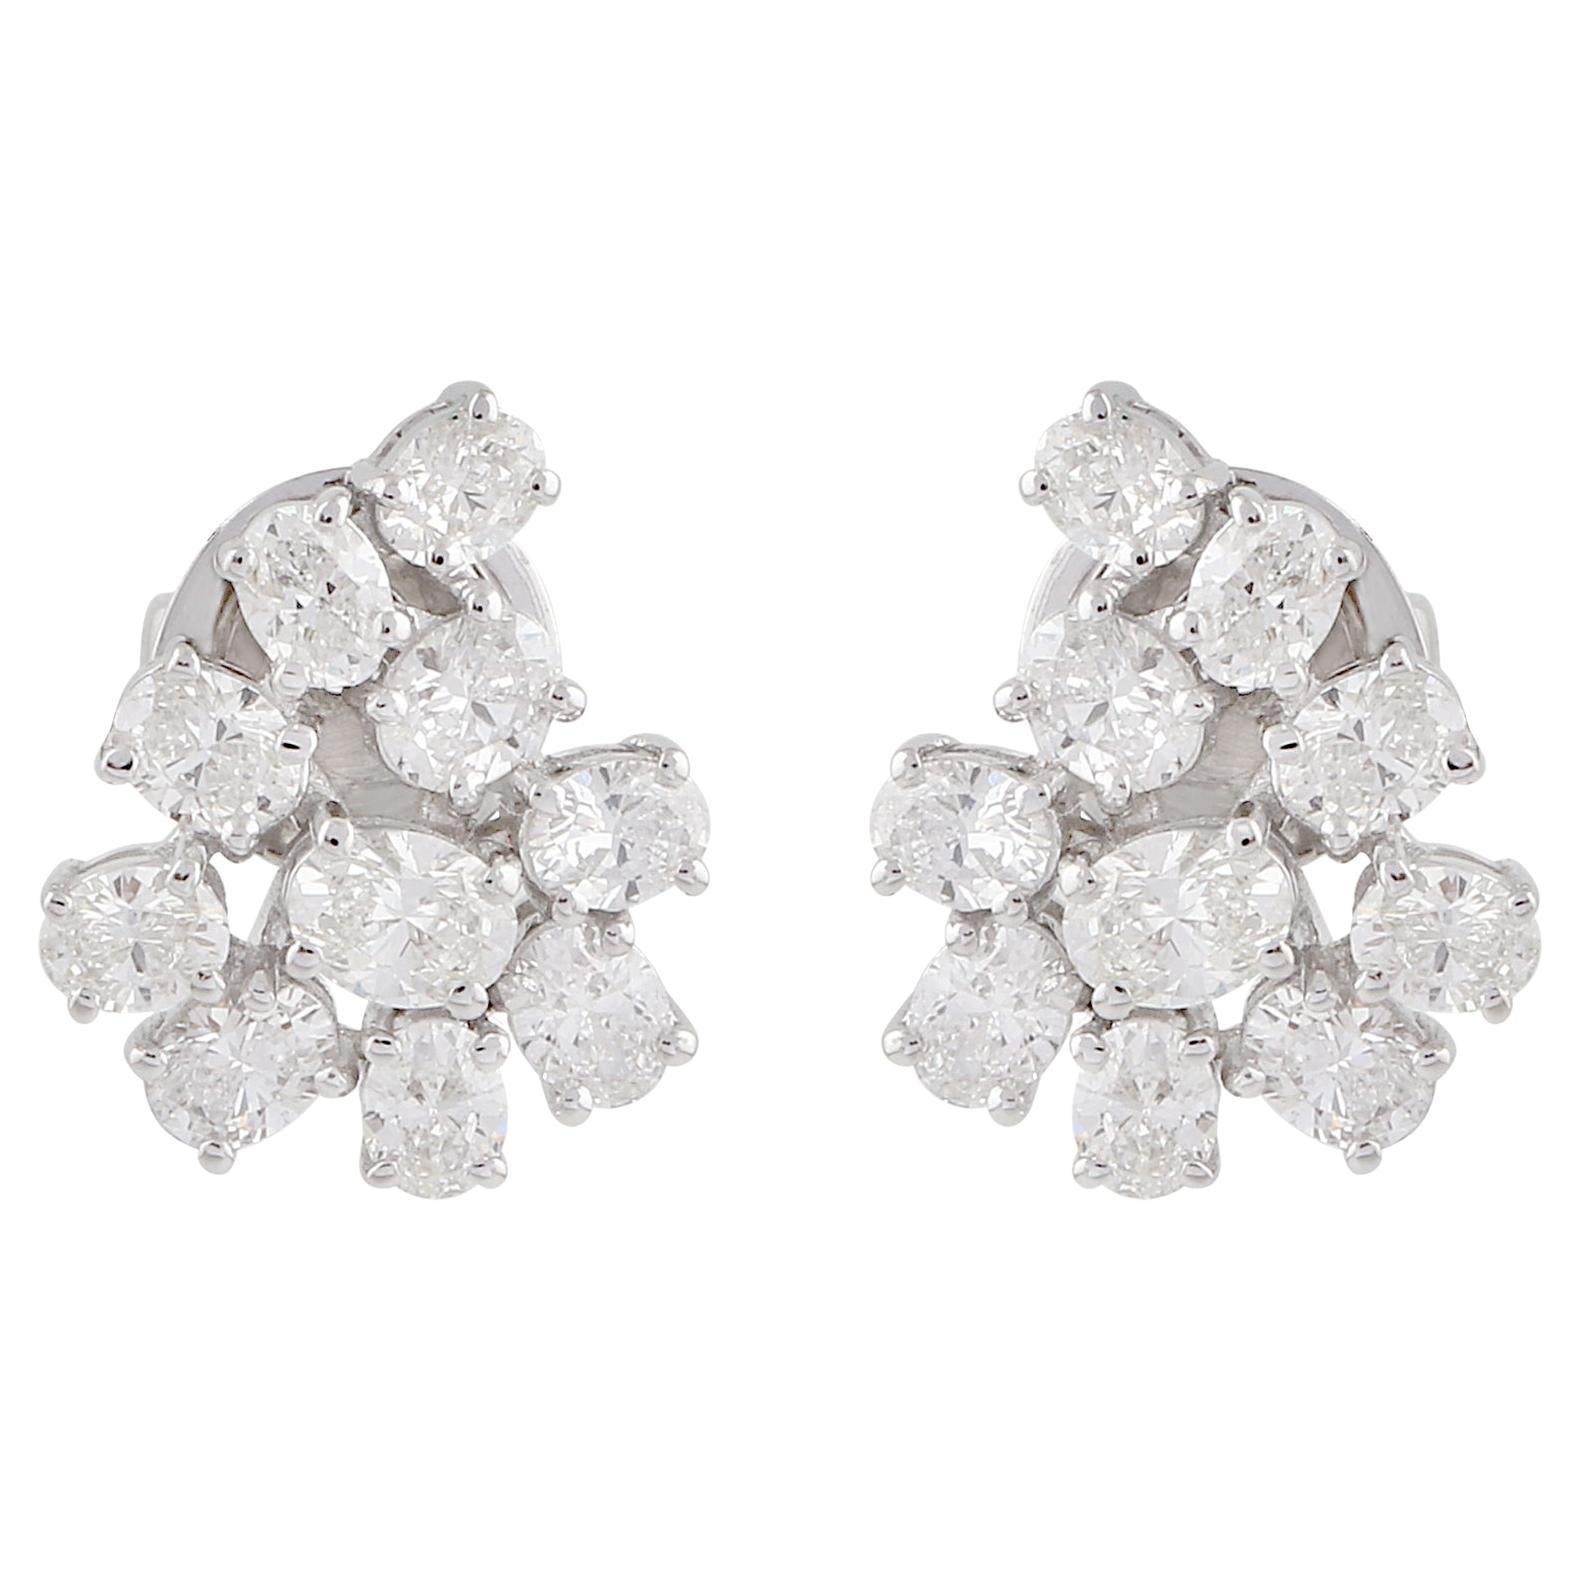 SI Clarity HI Color Oval Diamond Stud Earrings 18 Karat White Gold Fine Jewelry